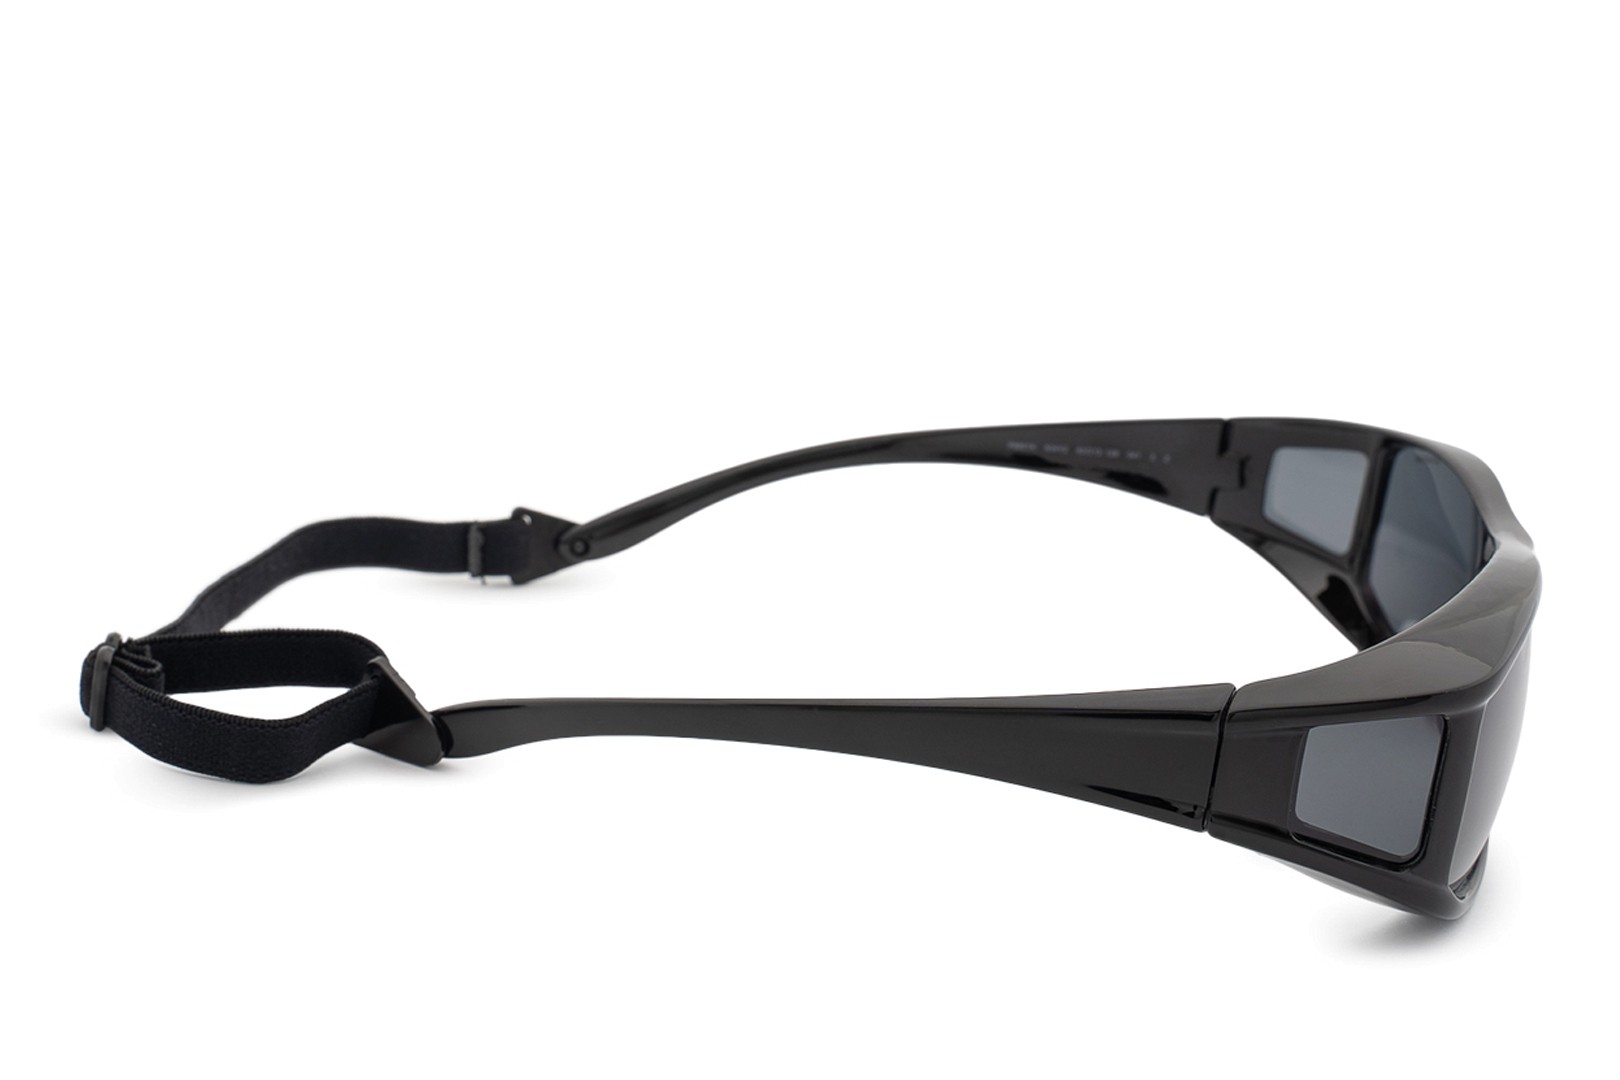 New Flip Up Fit Over Sunglasses Polarized Mirror Lens over PRESCRIPTION  GLASSES | eBay